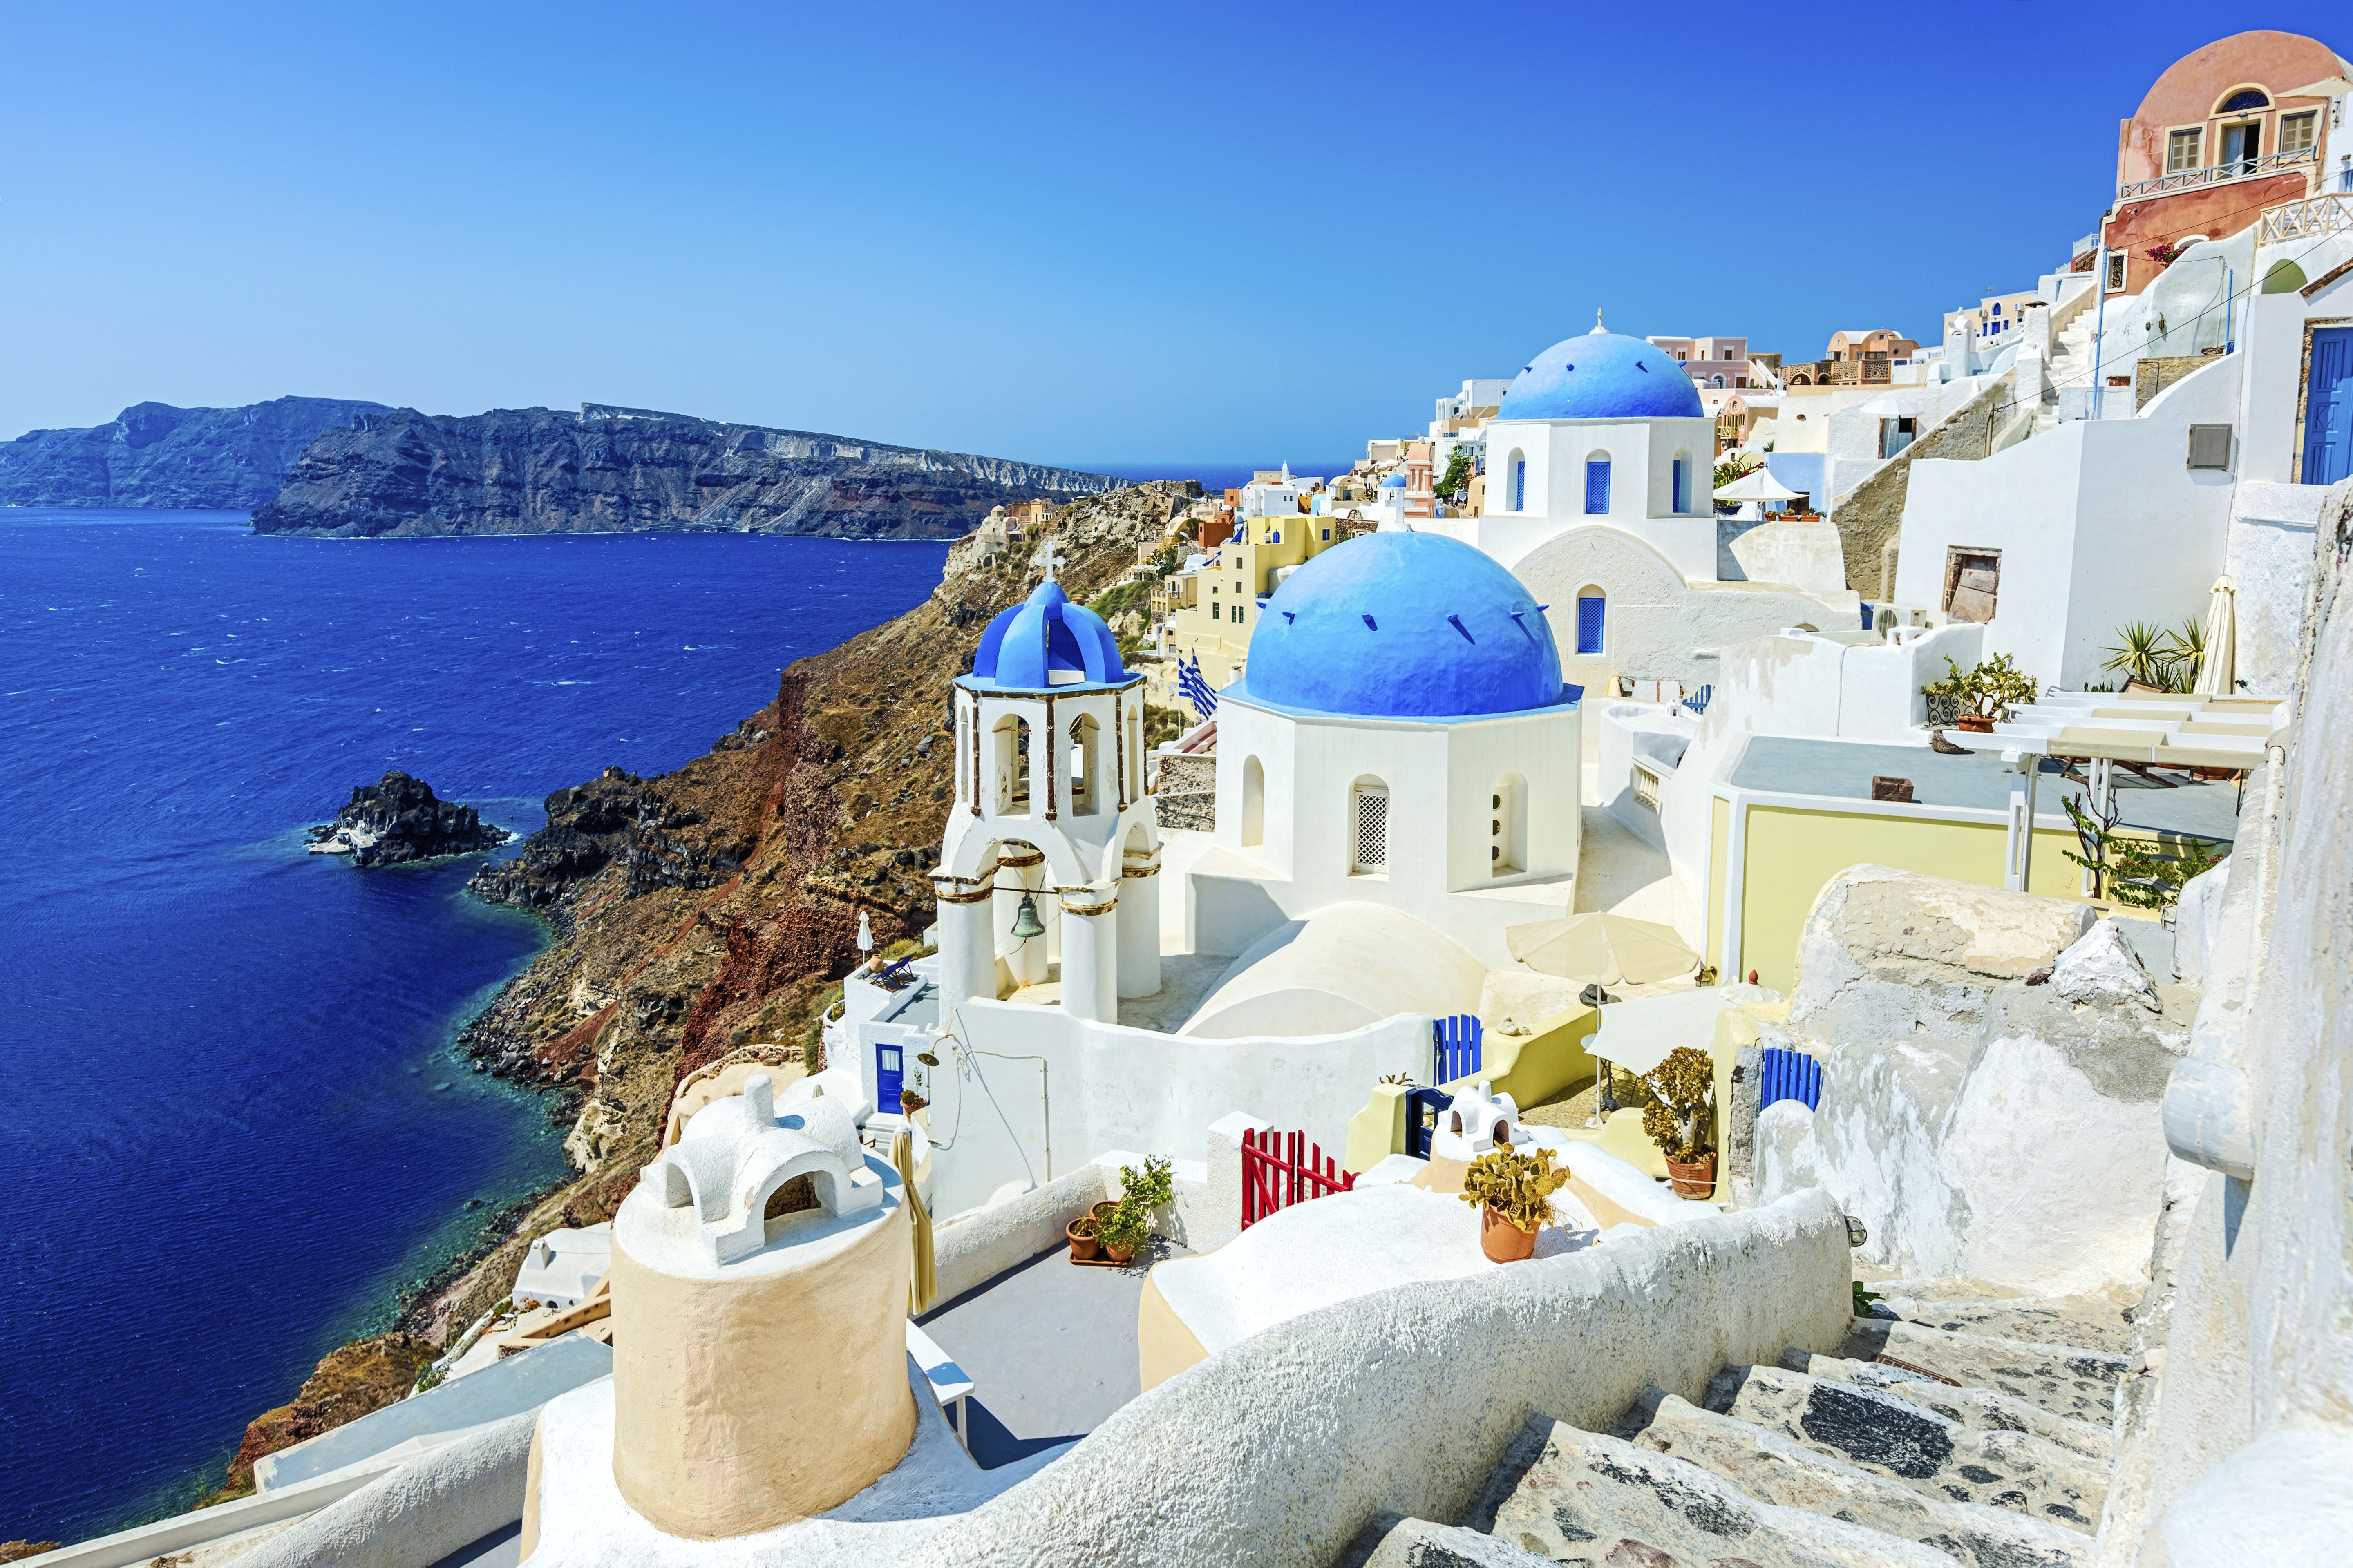 A Postcard from Santorini - Into the Blue | Ryanair Travel Blog